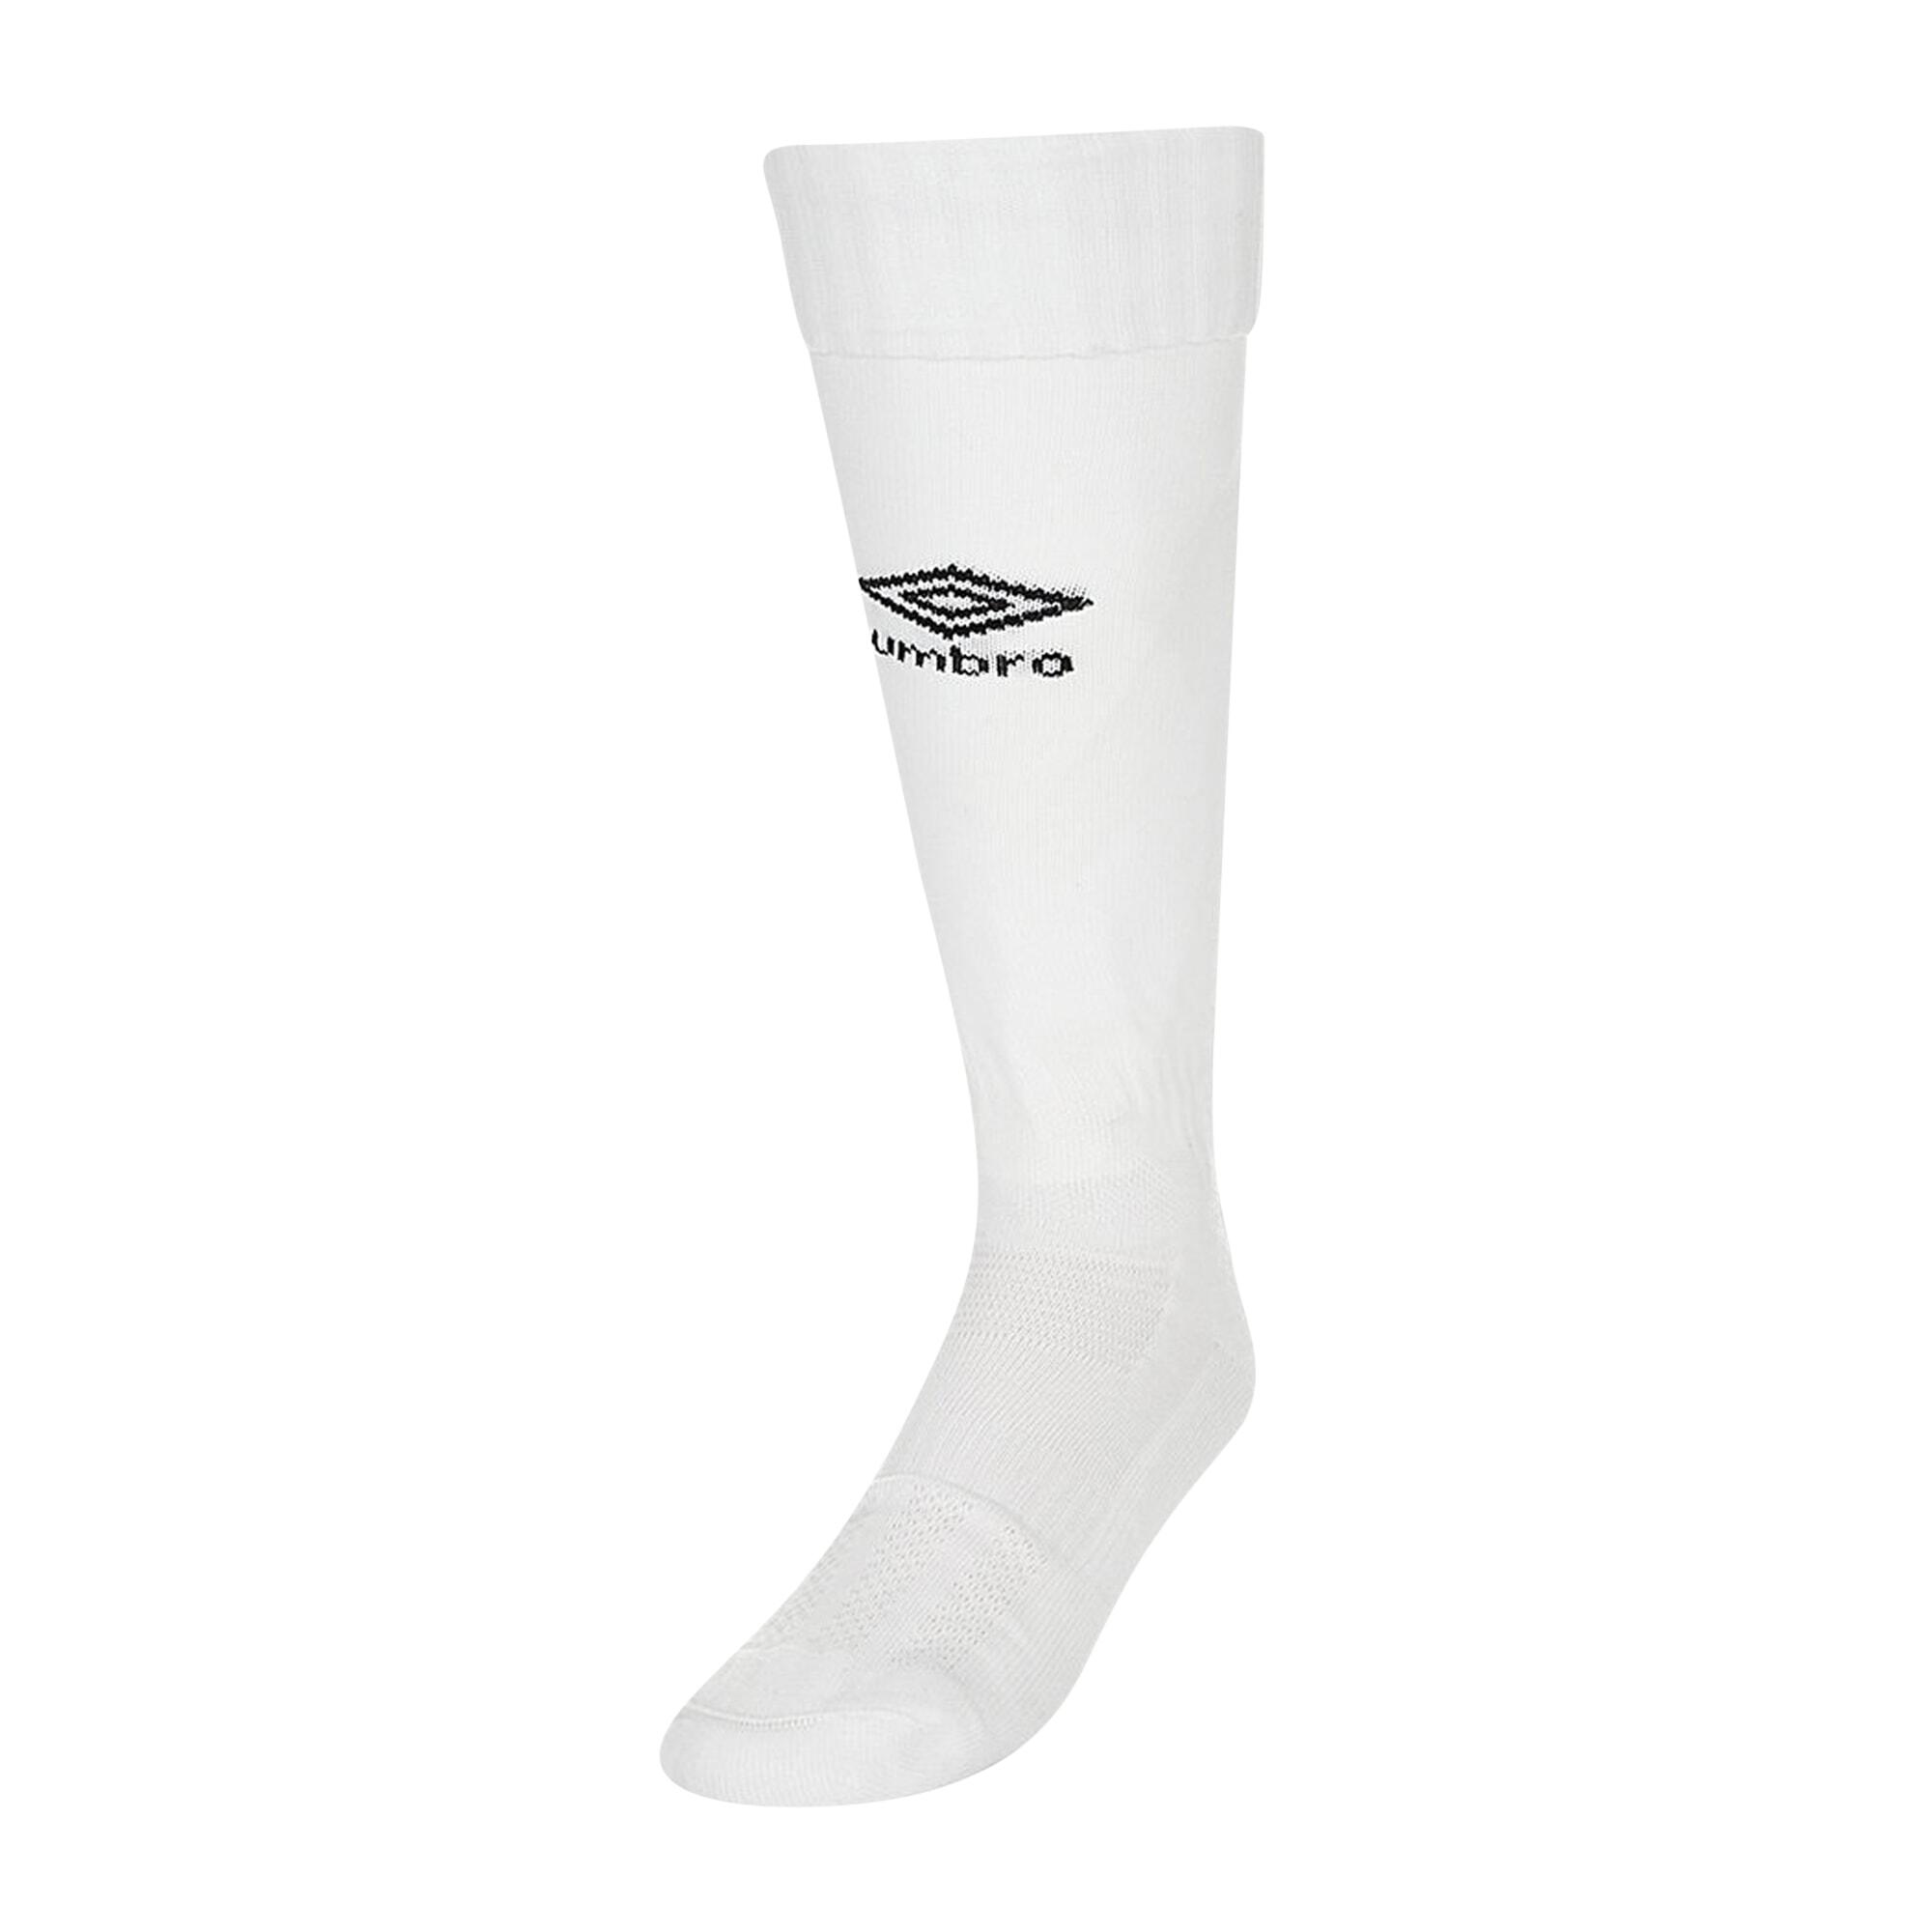 UMBRO Mens Classico Socks (White)